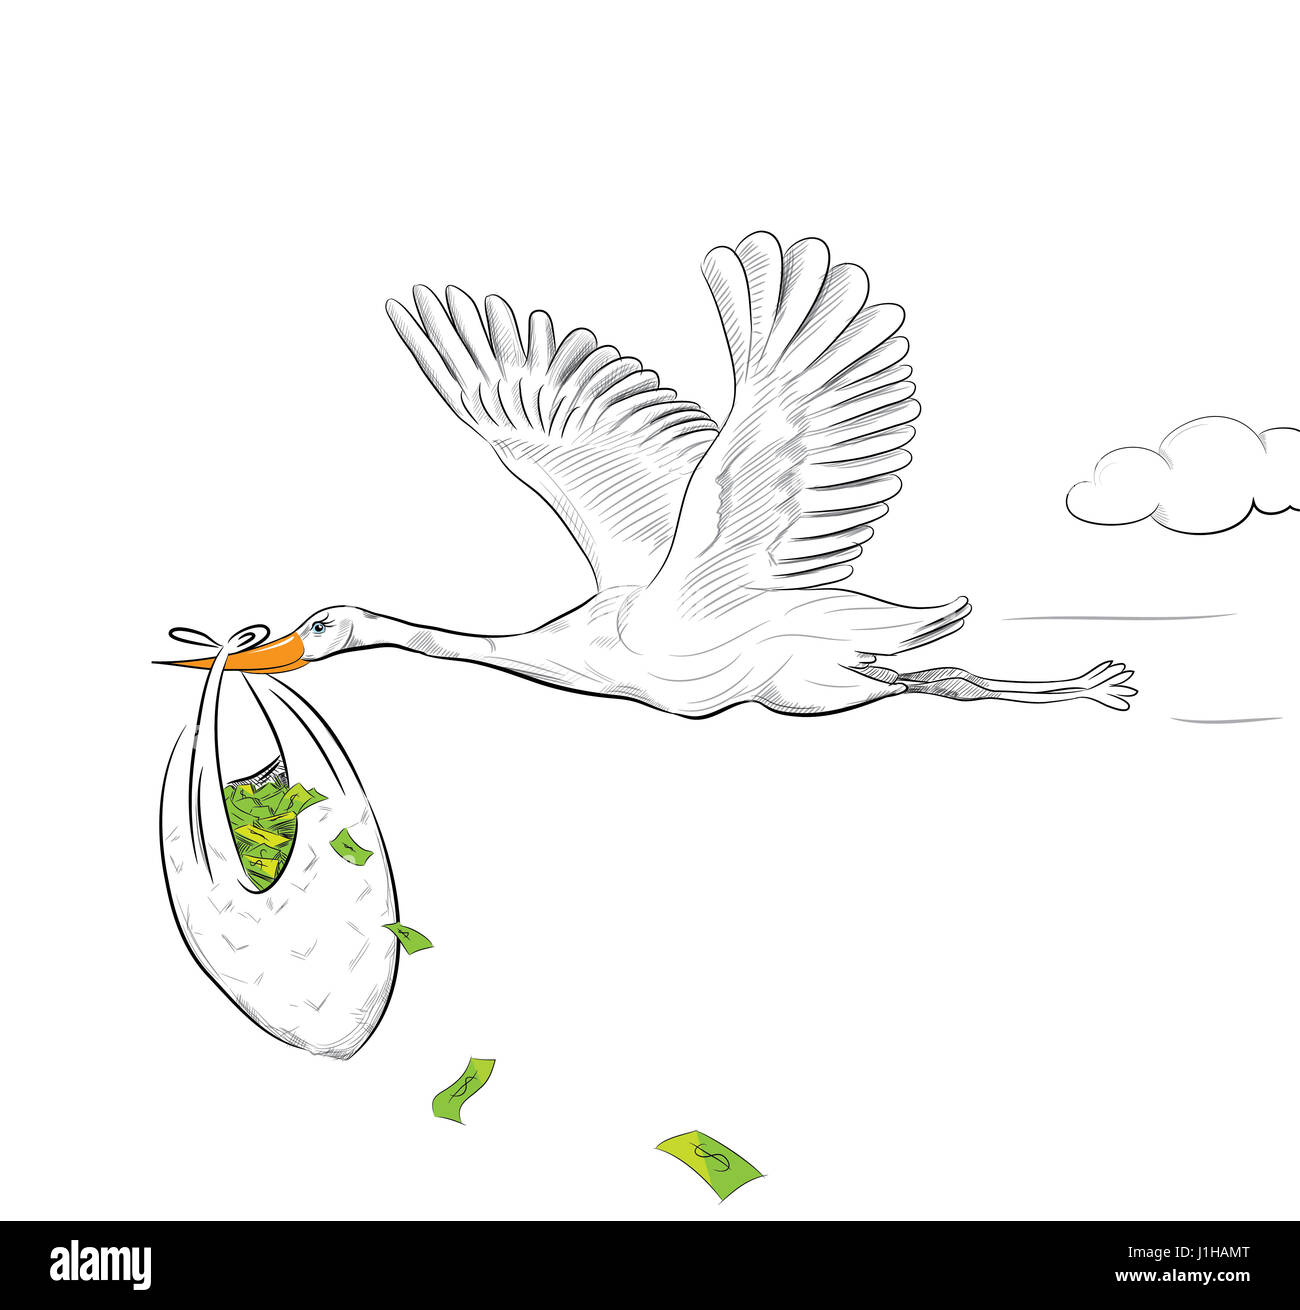 Stork Flying With Money Stock Photo